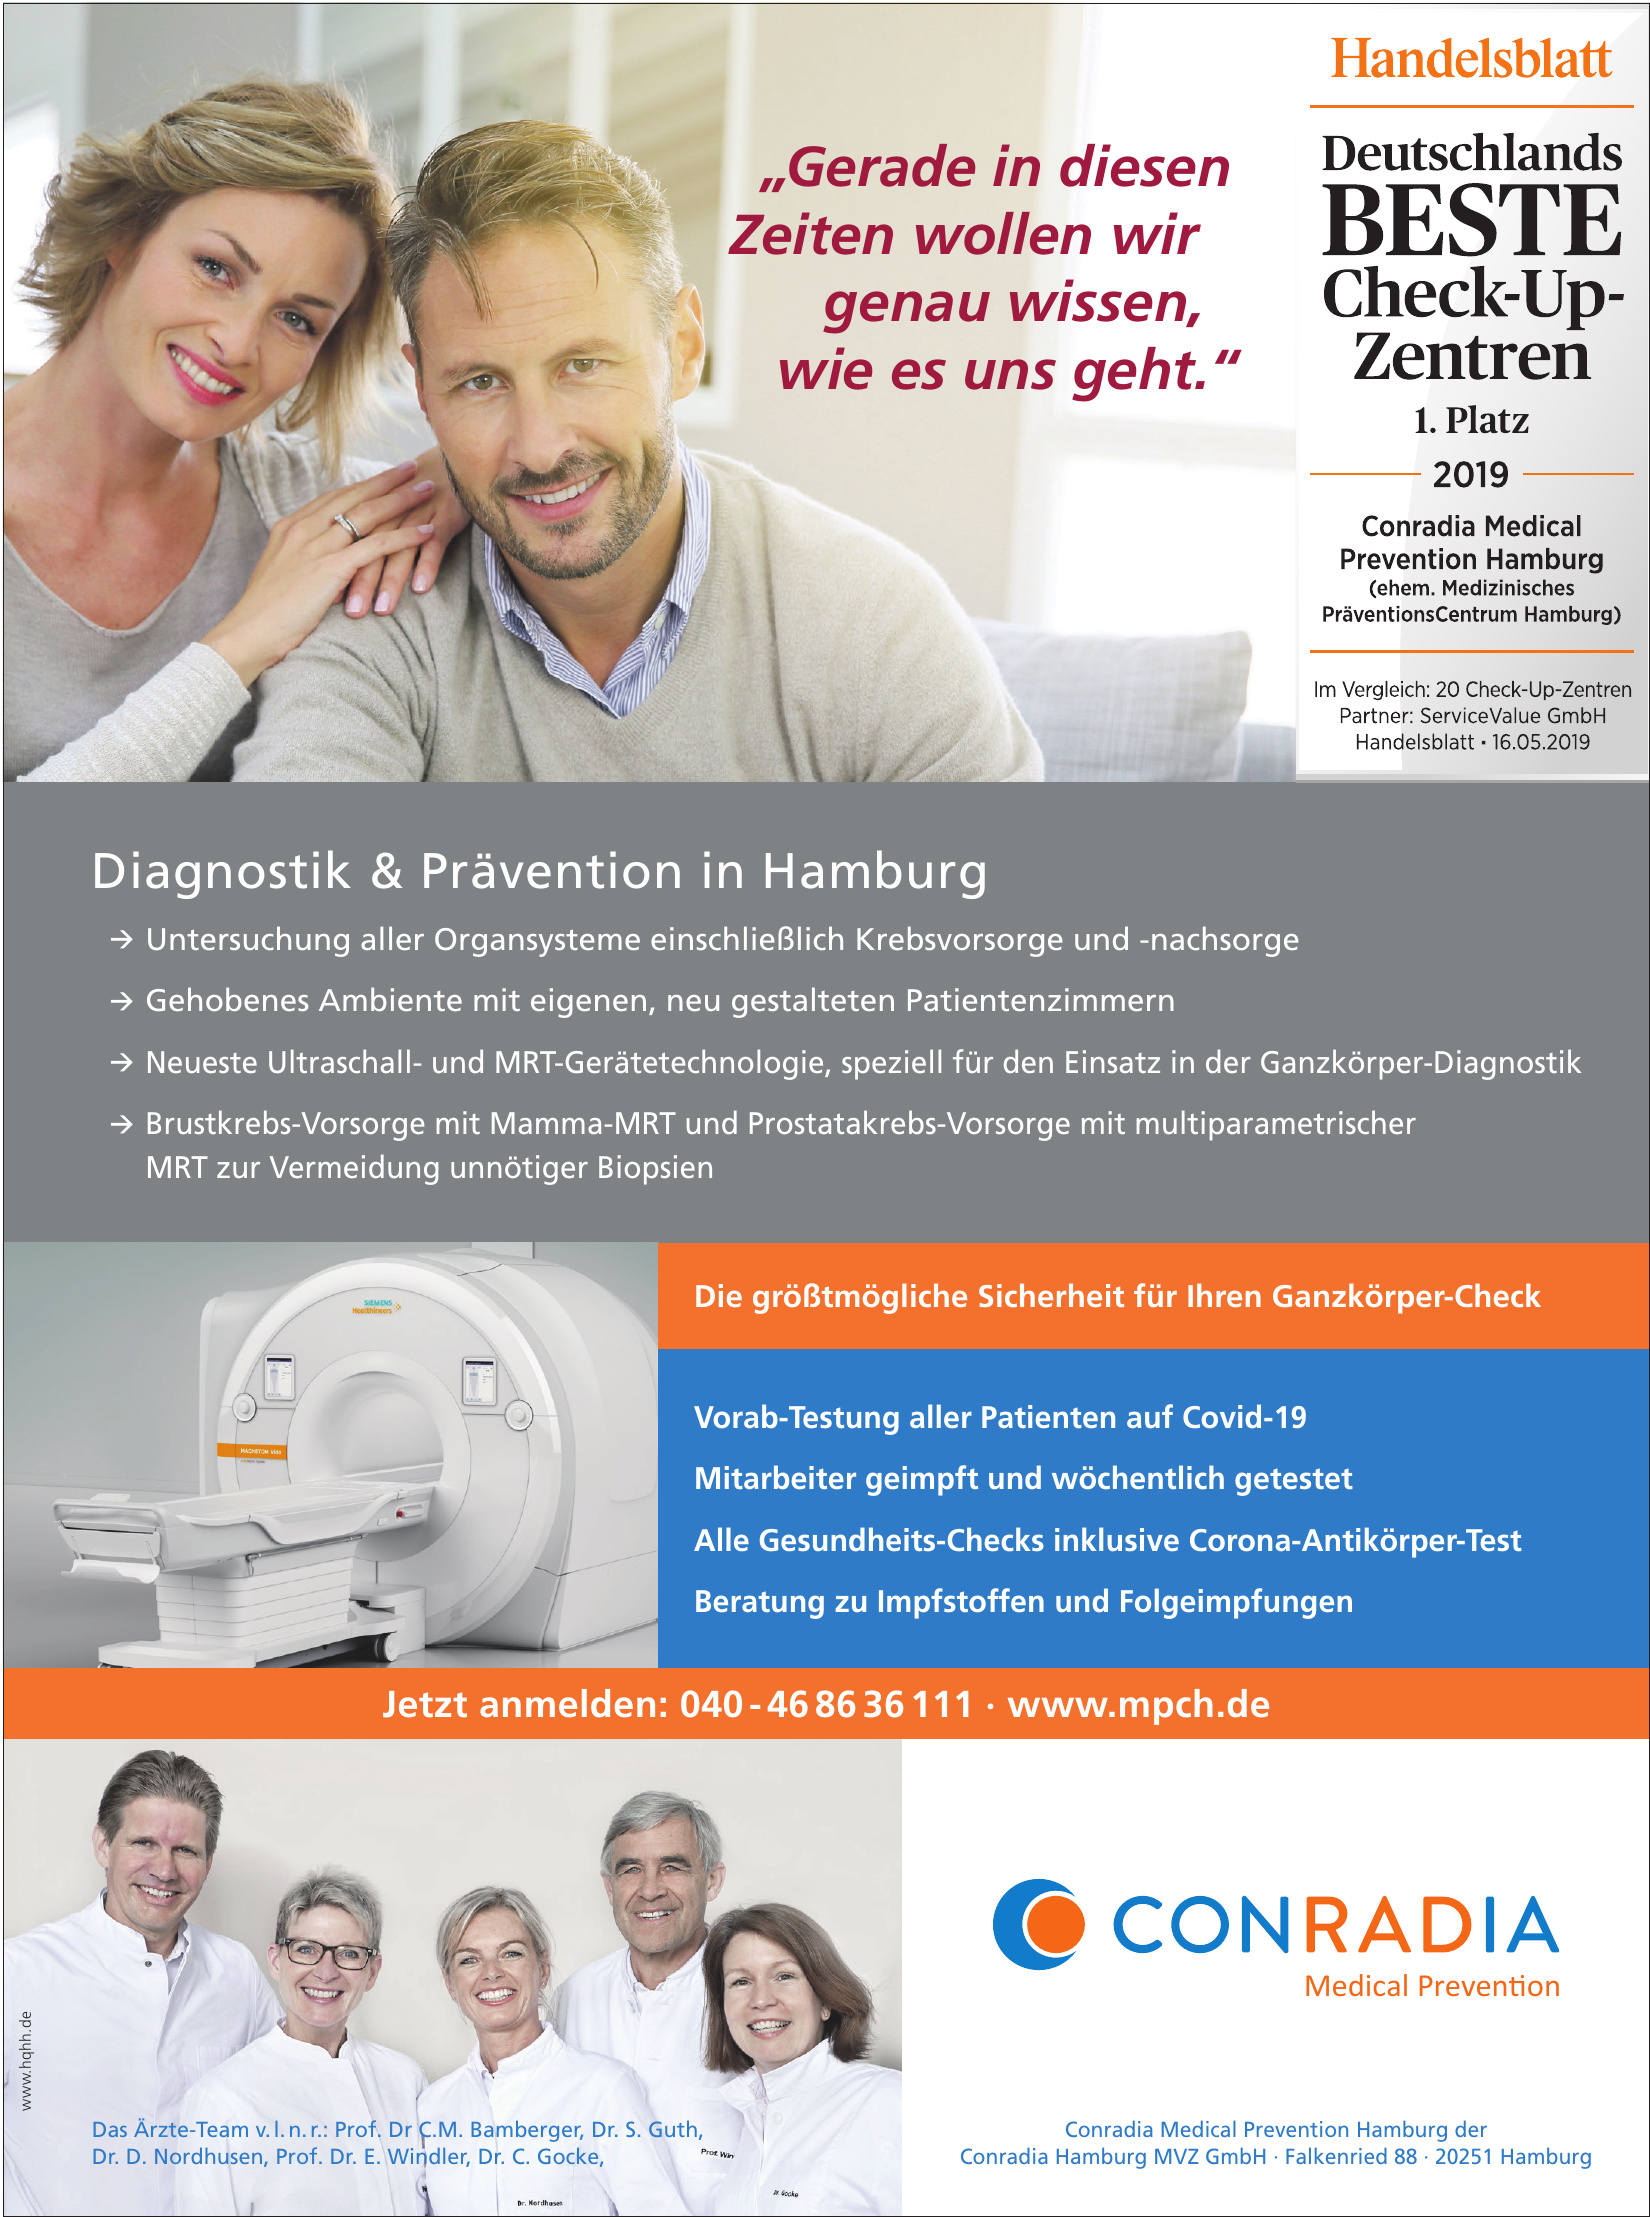 Conradia Medical Prevention Hamburg der Conradia Hamburg MVZ GmbH